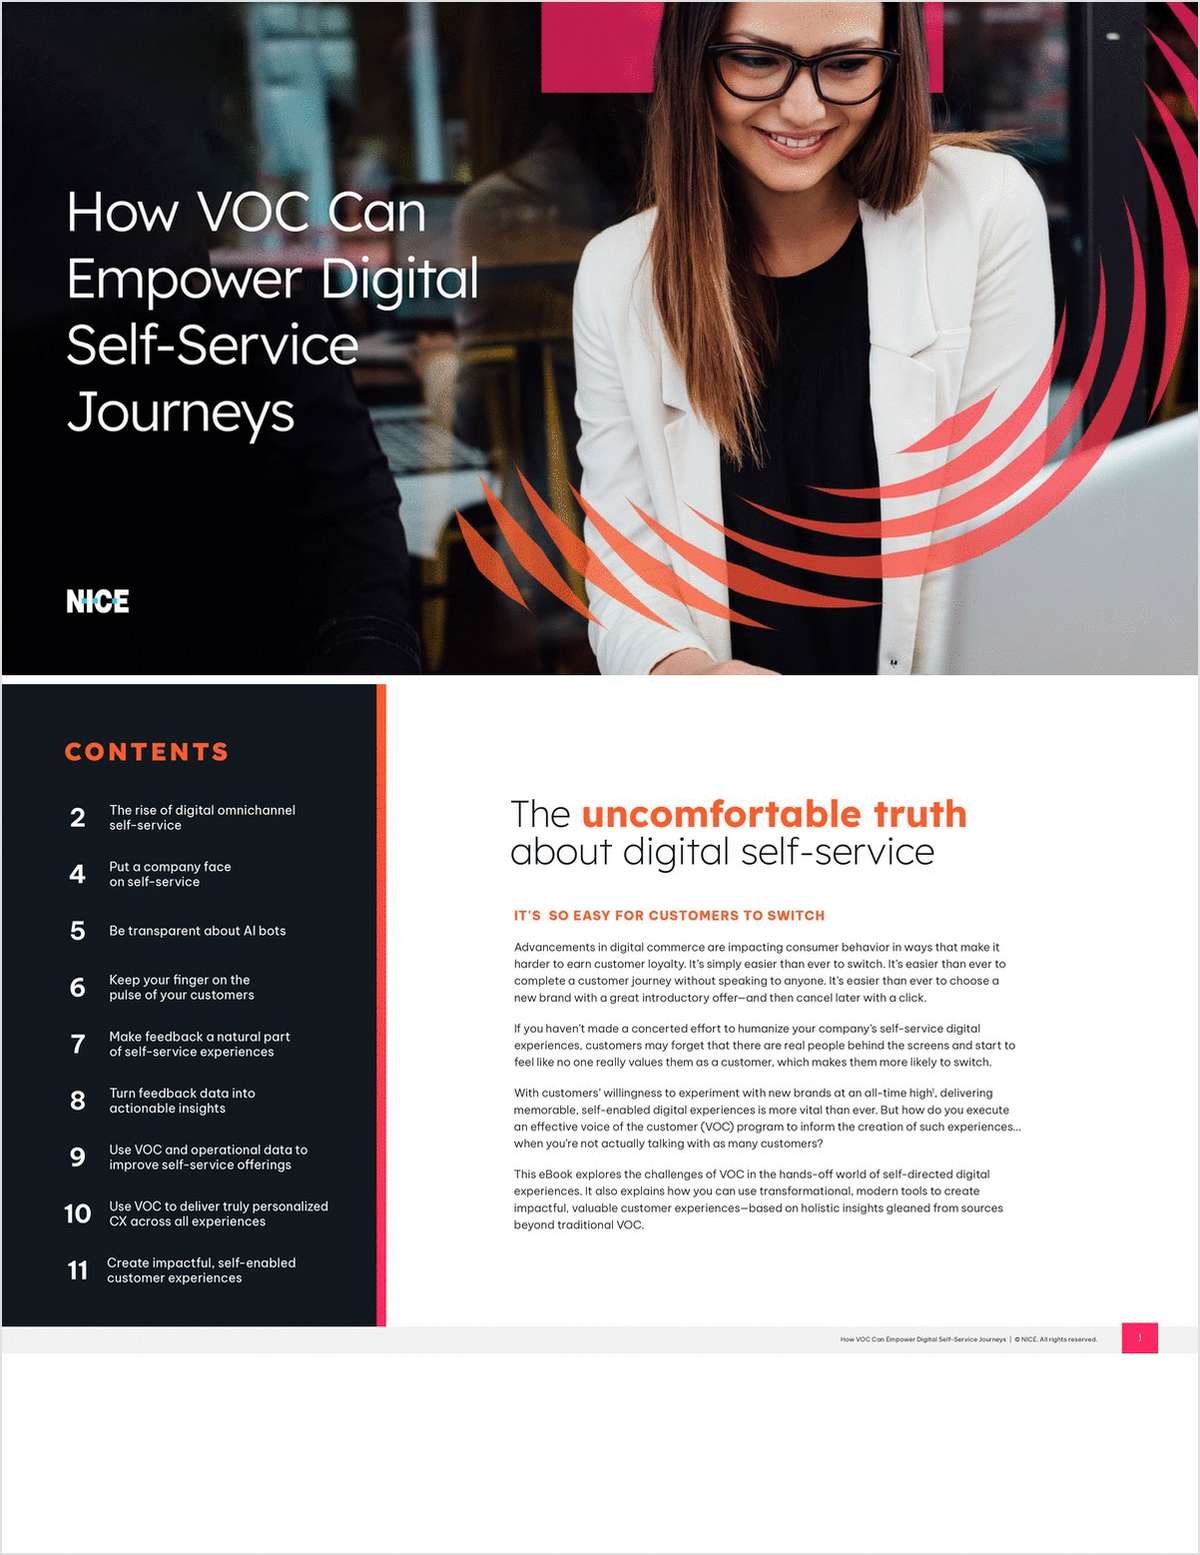 How VoC can empower digital self-service journeys